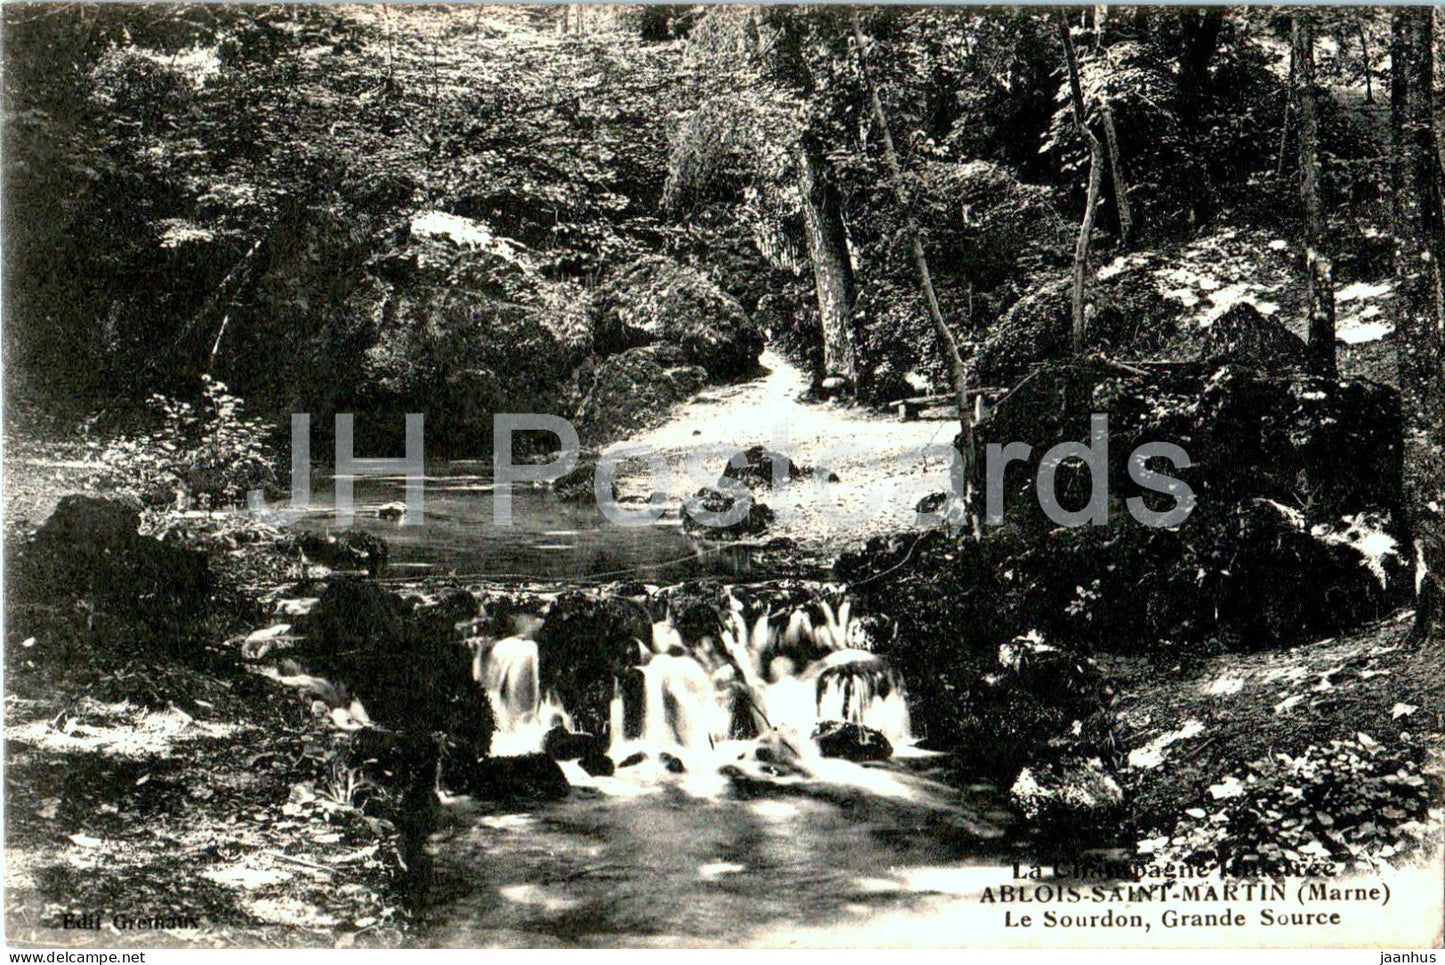 Ablois Saint Martin - Le Sourdon - Grande Source - old postcard - 1915 - France - used - JH Postcards